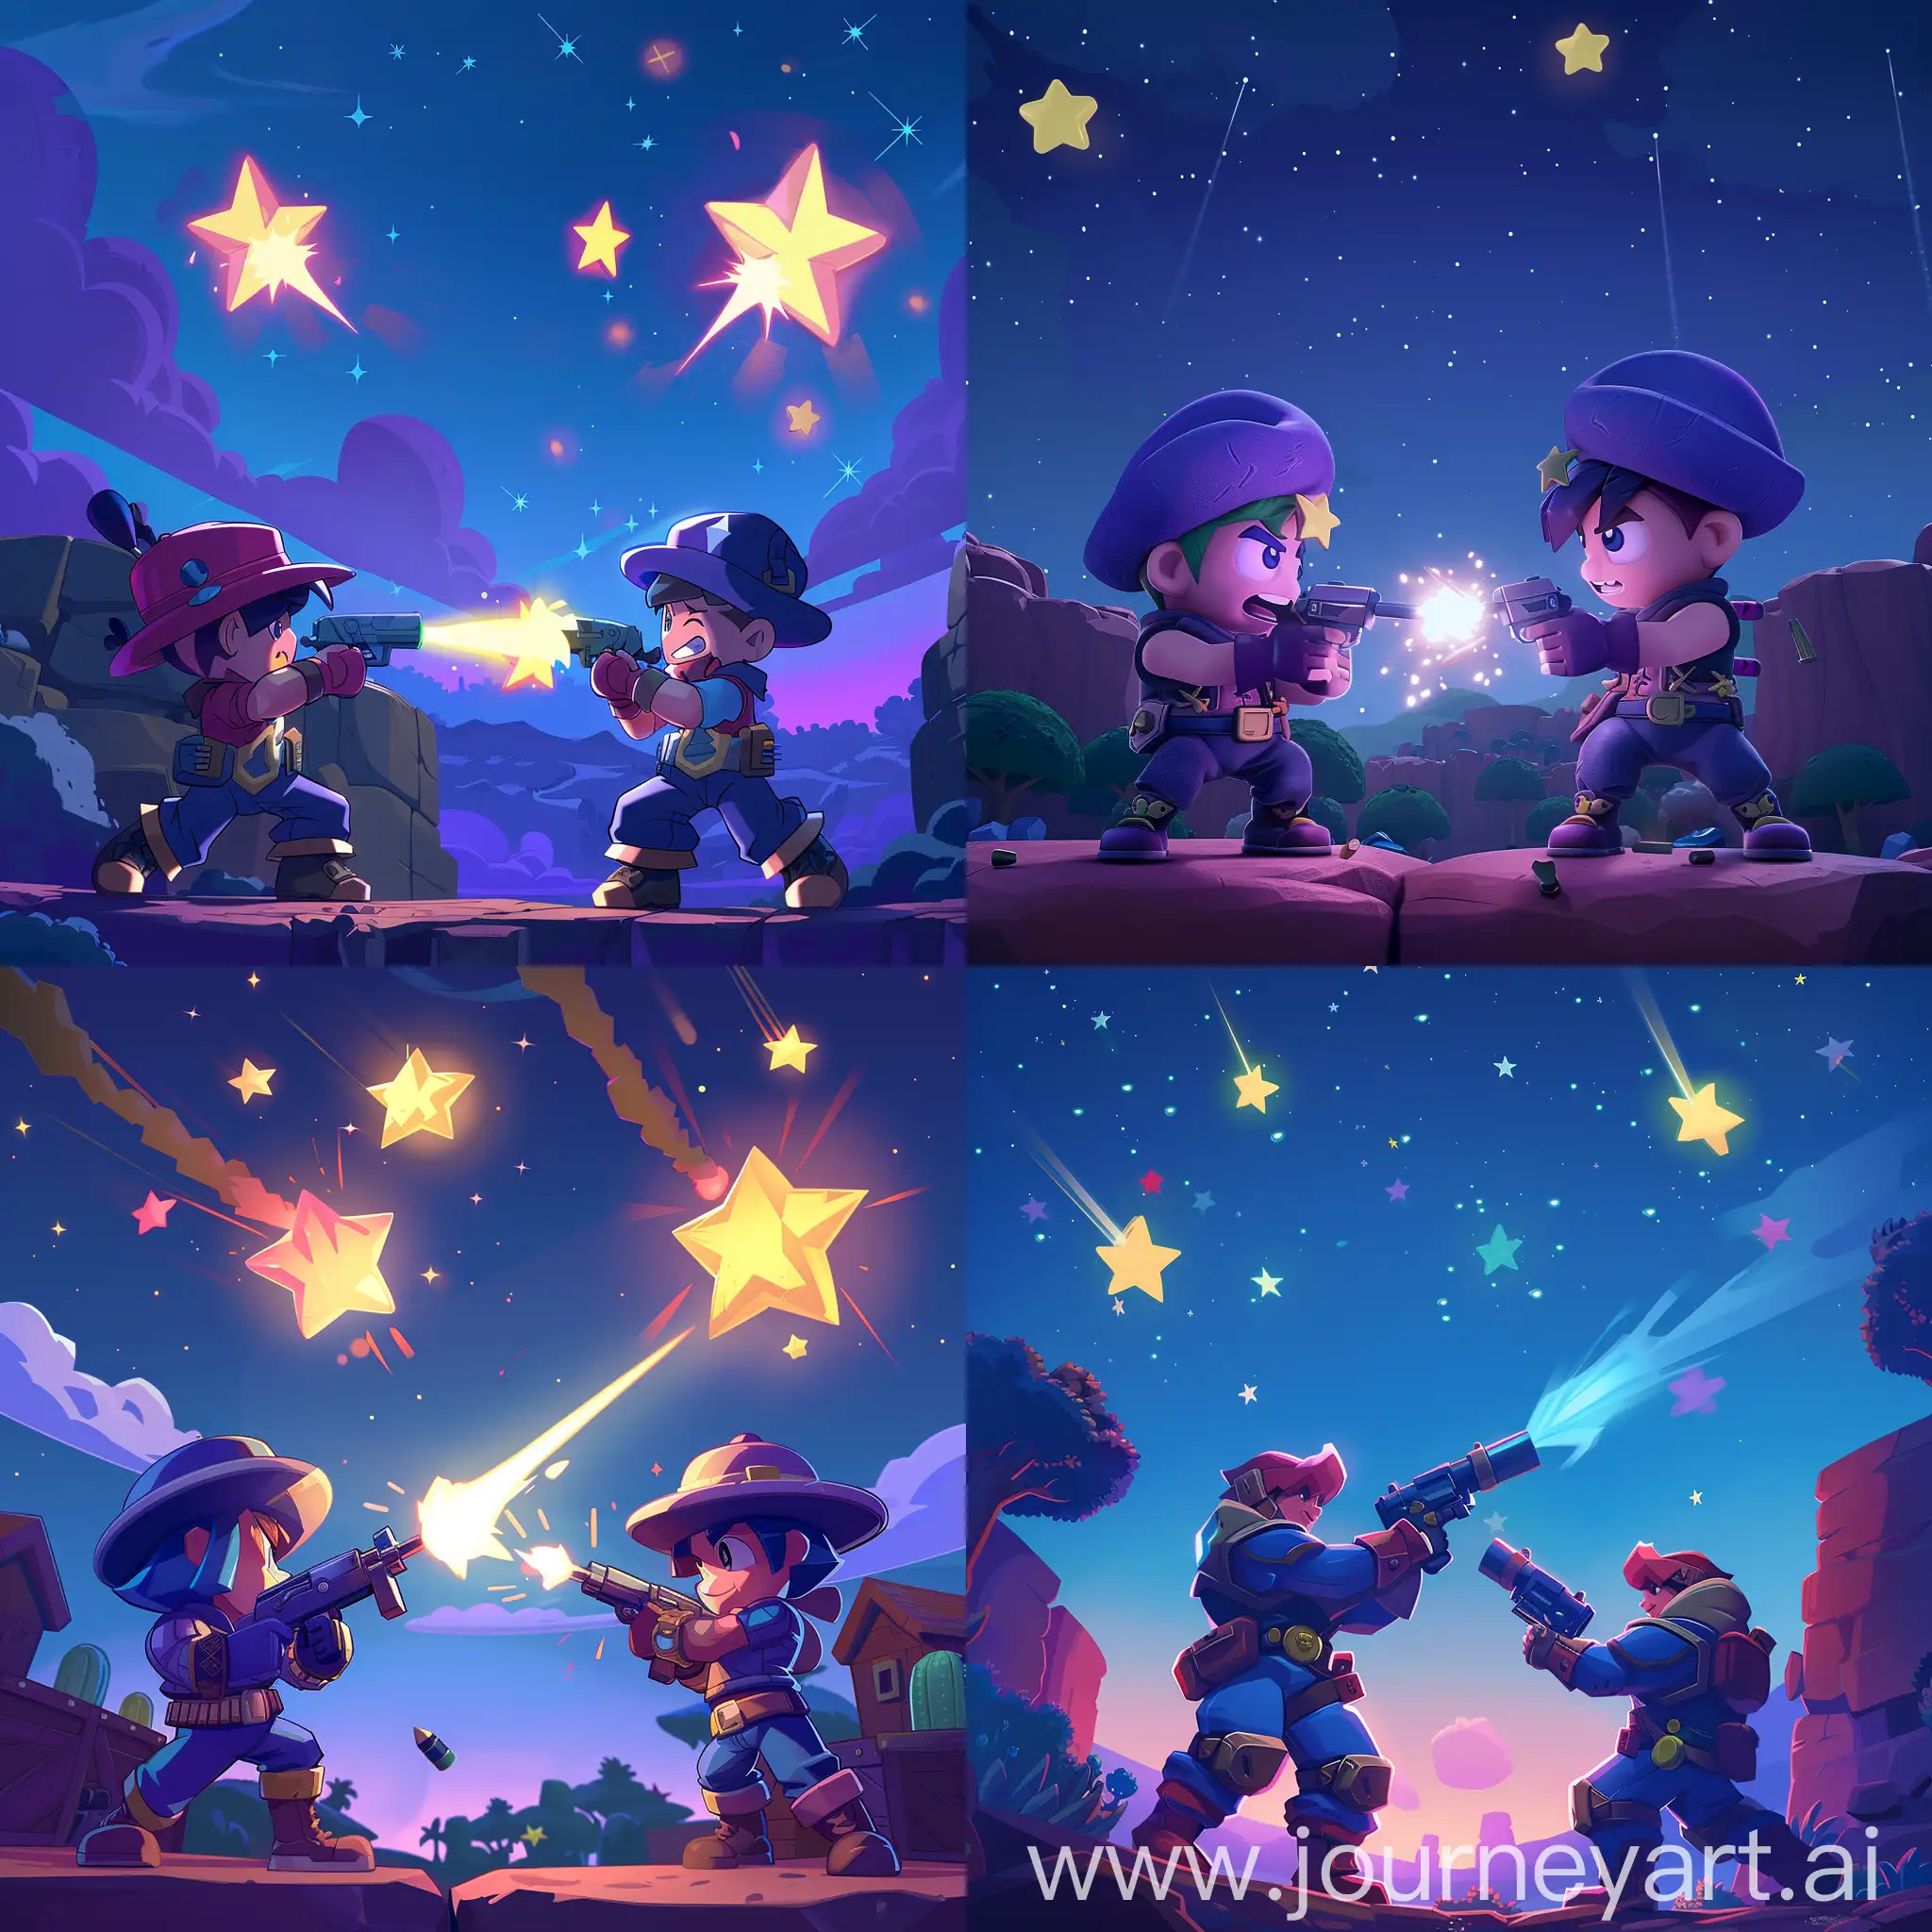 Brawl-Stars-Fighters-Dueling-Under-Starlit-Sky